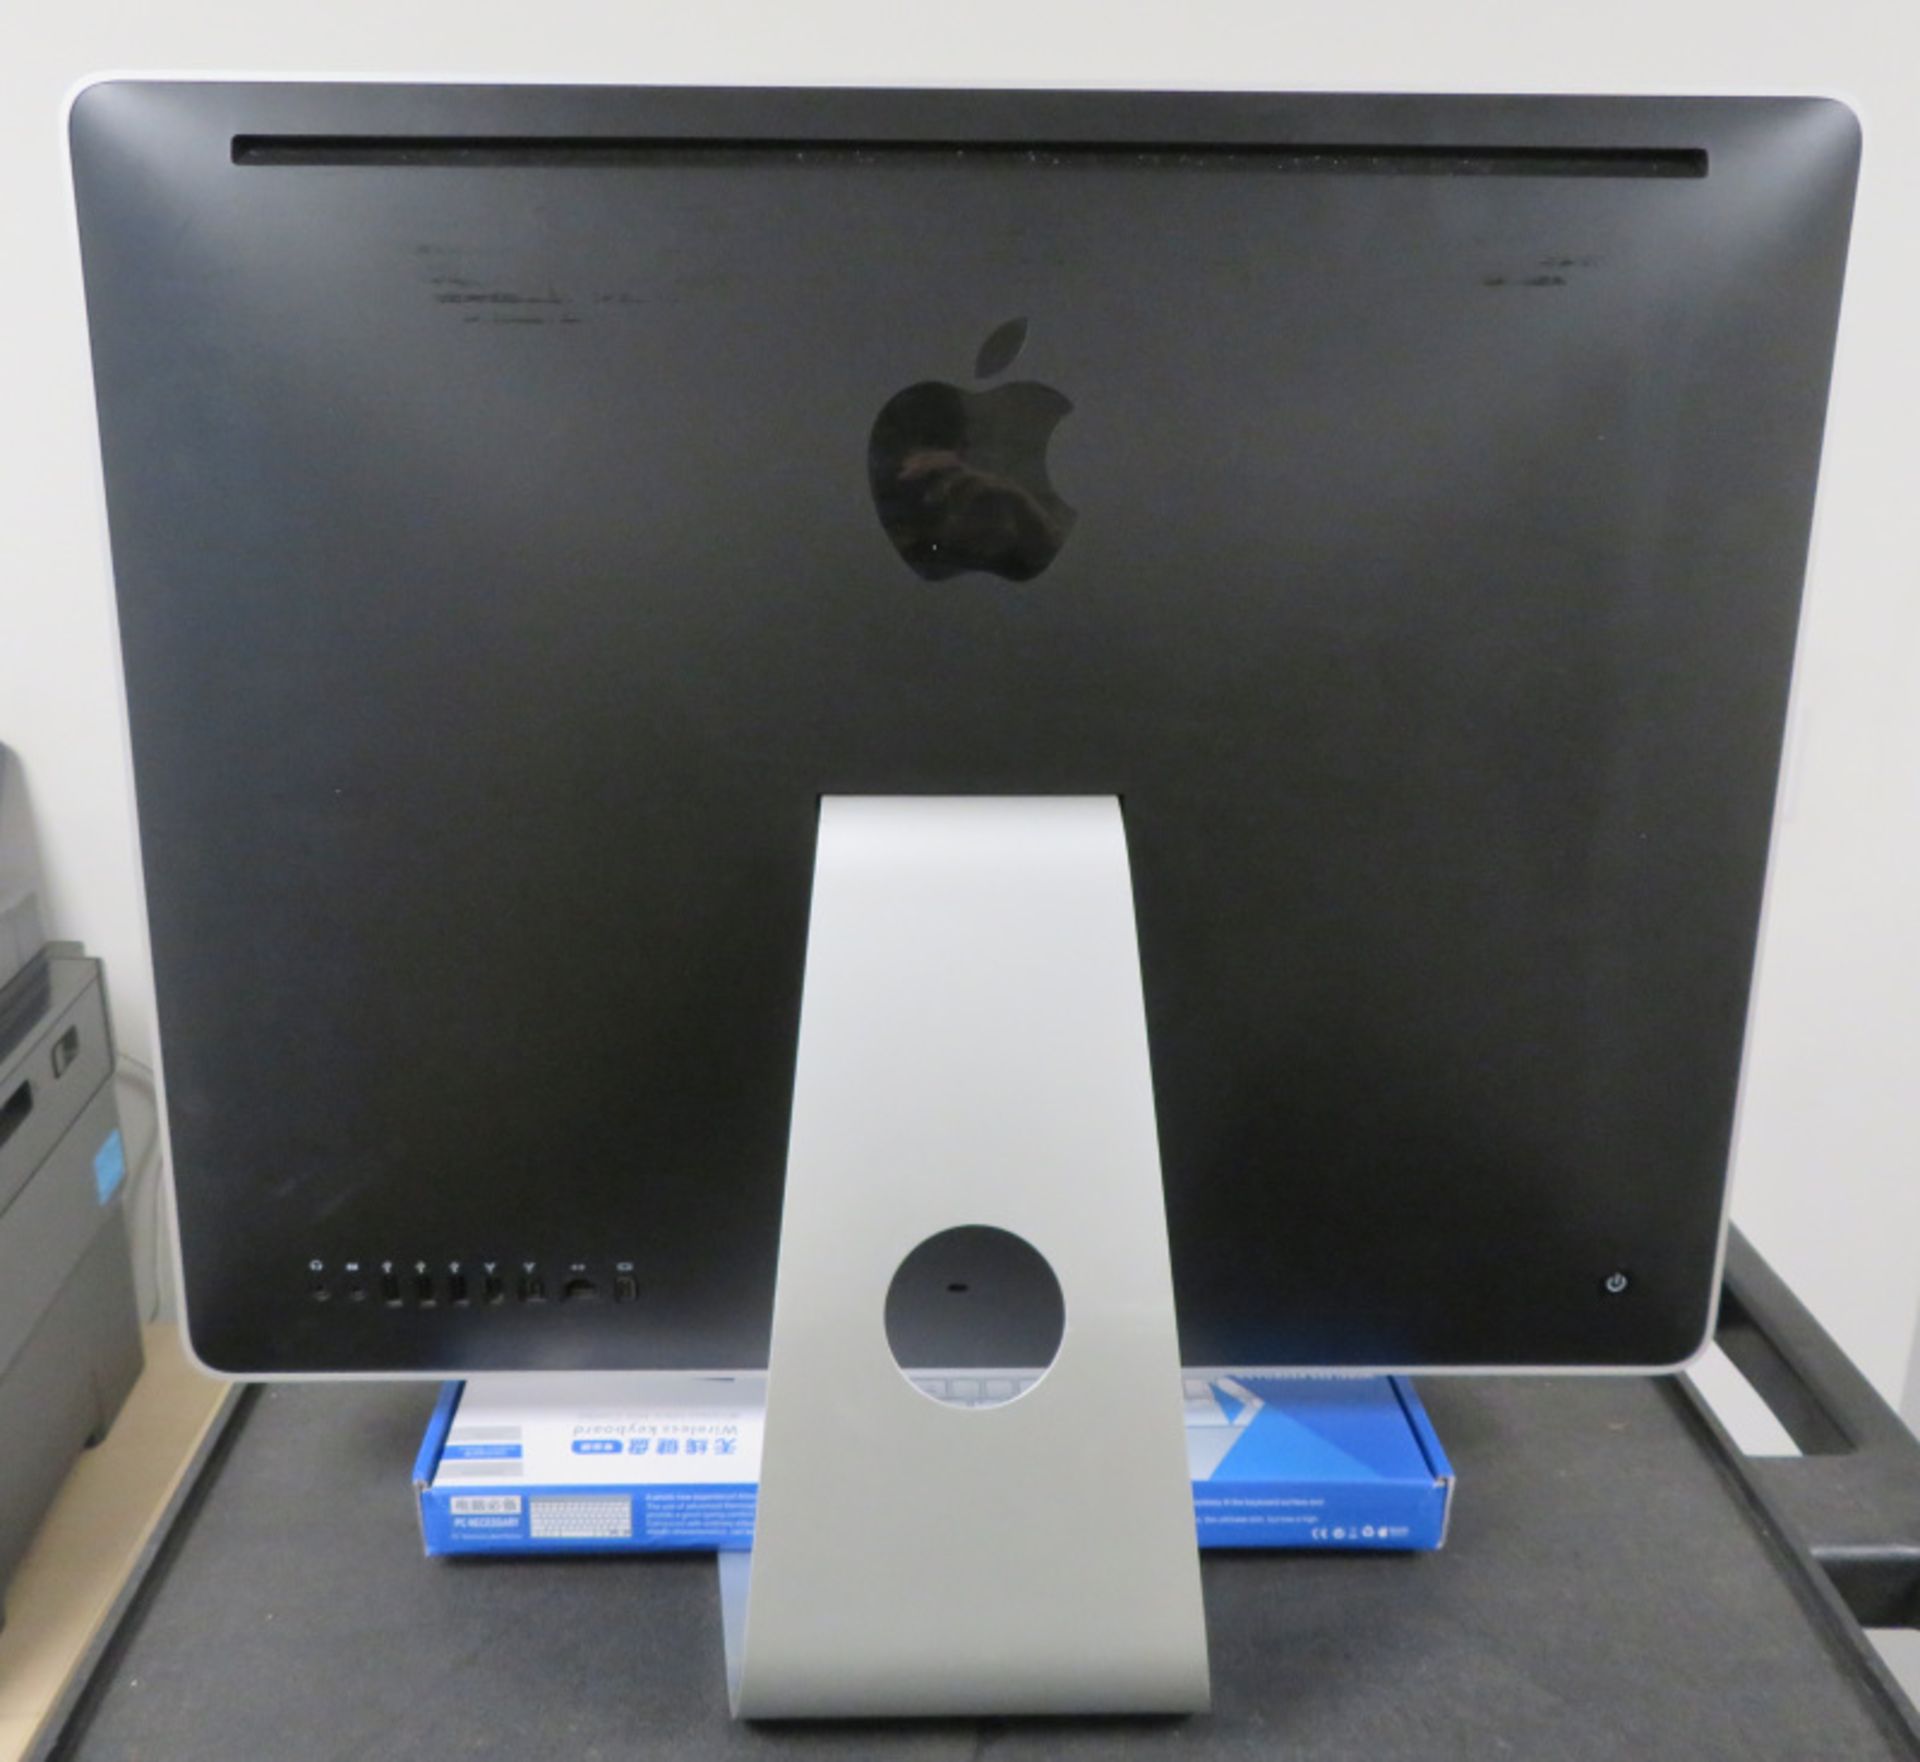 iMac 24in - 2007 model - Serial No. - 748281PHZCV - Model No. A1225 - 2.8GHz - 500gb - 2gb RAM - Image 5 of 11